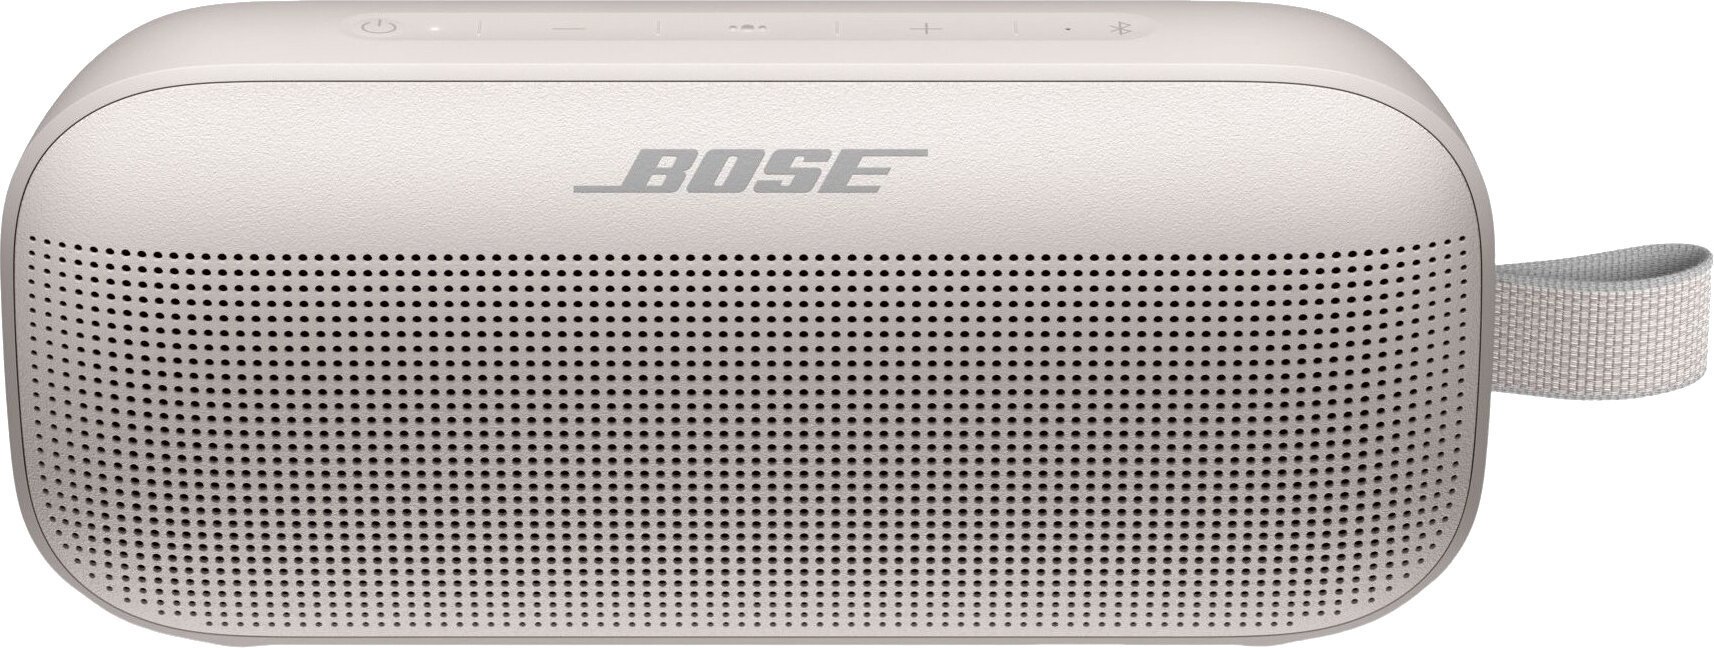 Prijenosni zvučnik Bose SoundLink Flex White